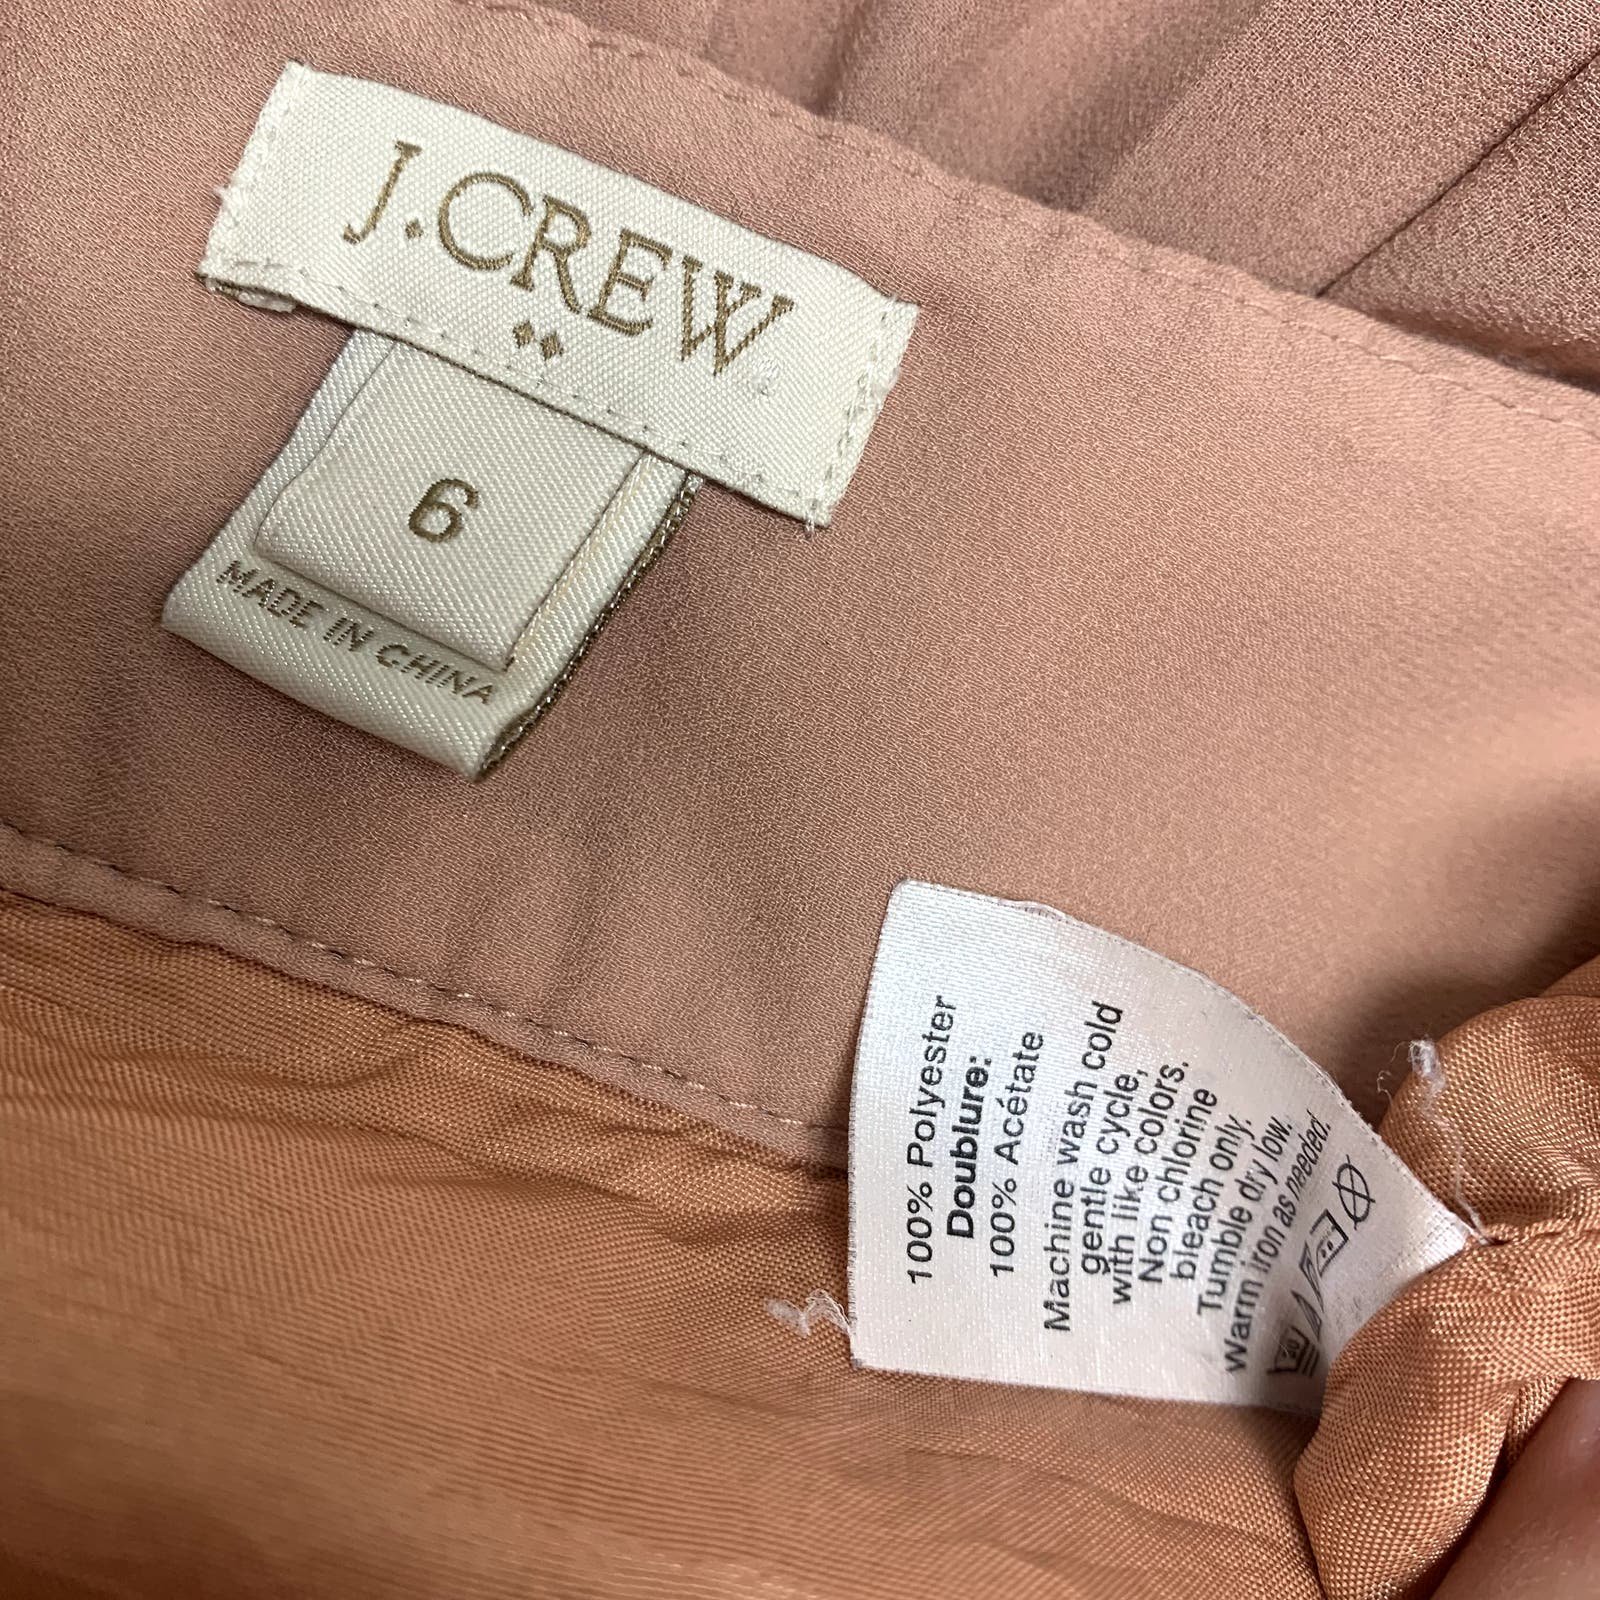 Elegant J. Crew Womens Size 6 Dusty Pink Pleated Skirt JXGmTBerA for sale